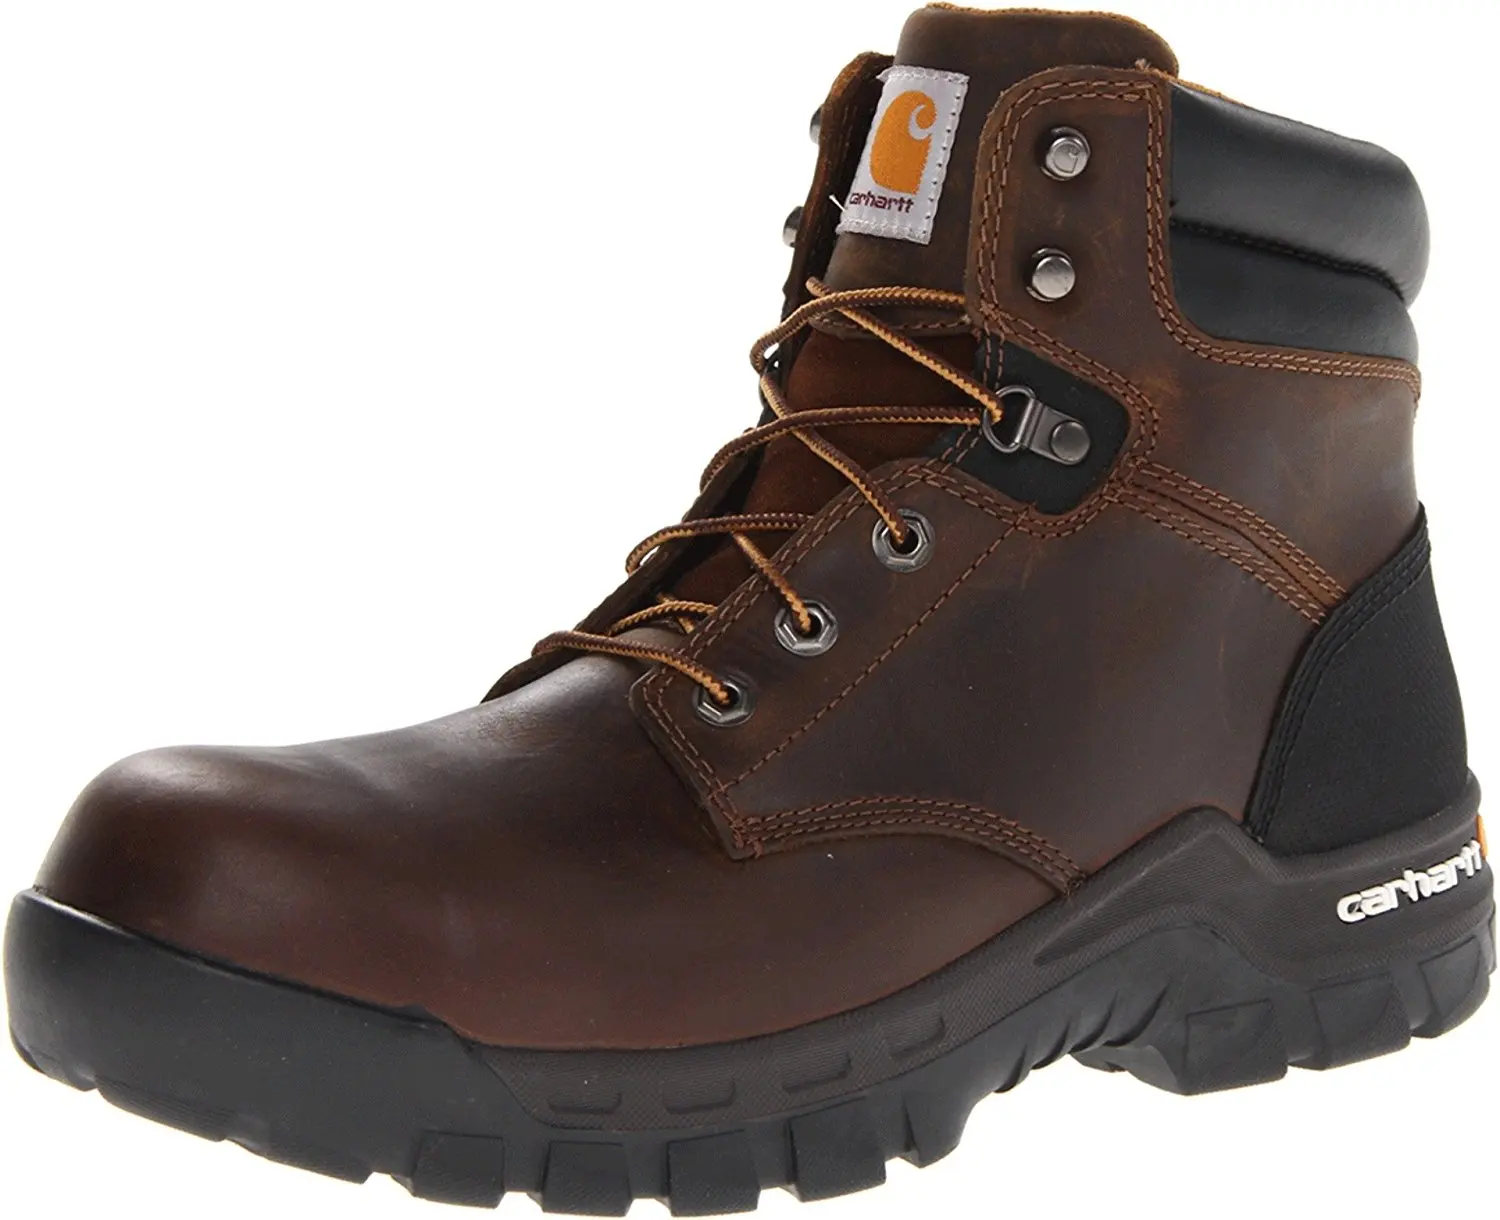 cmh4375 composite toe hiking boot 